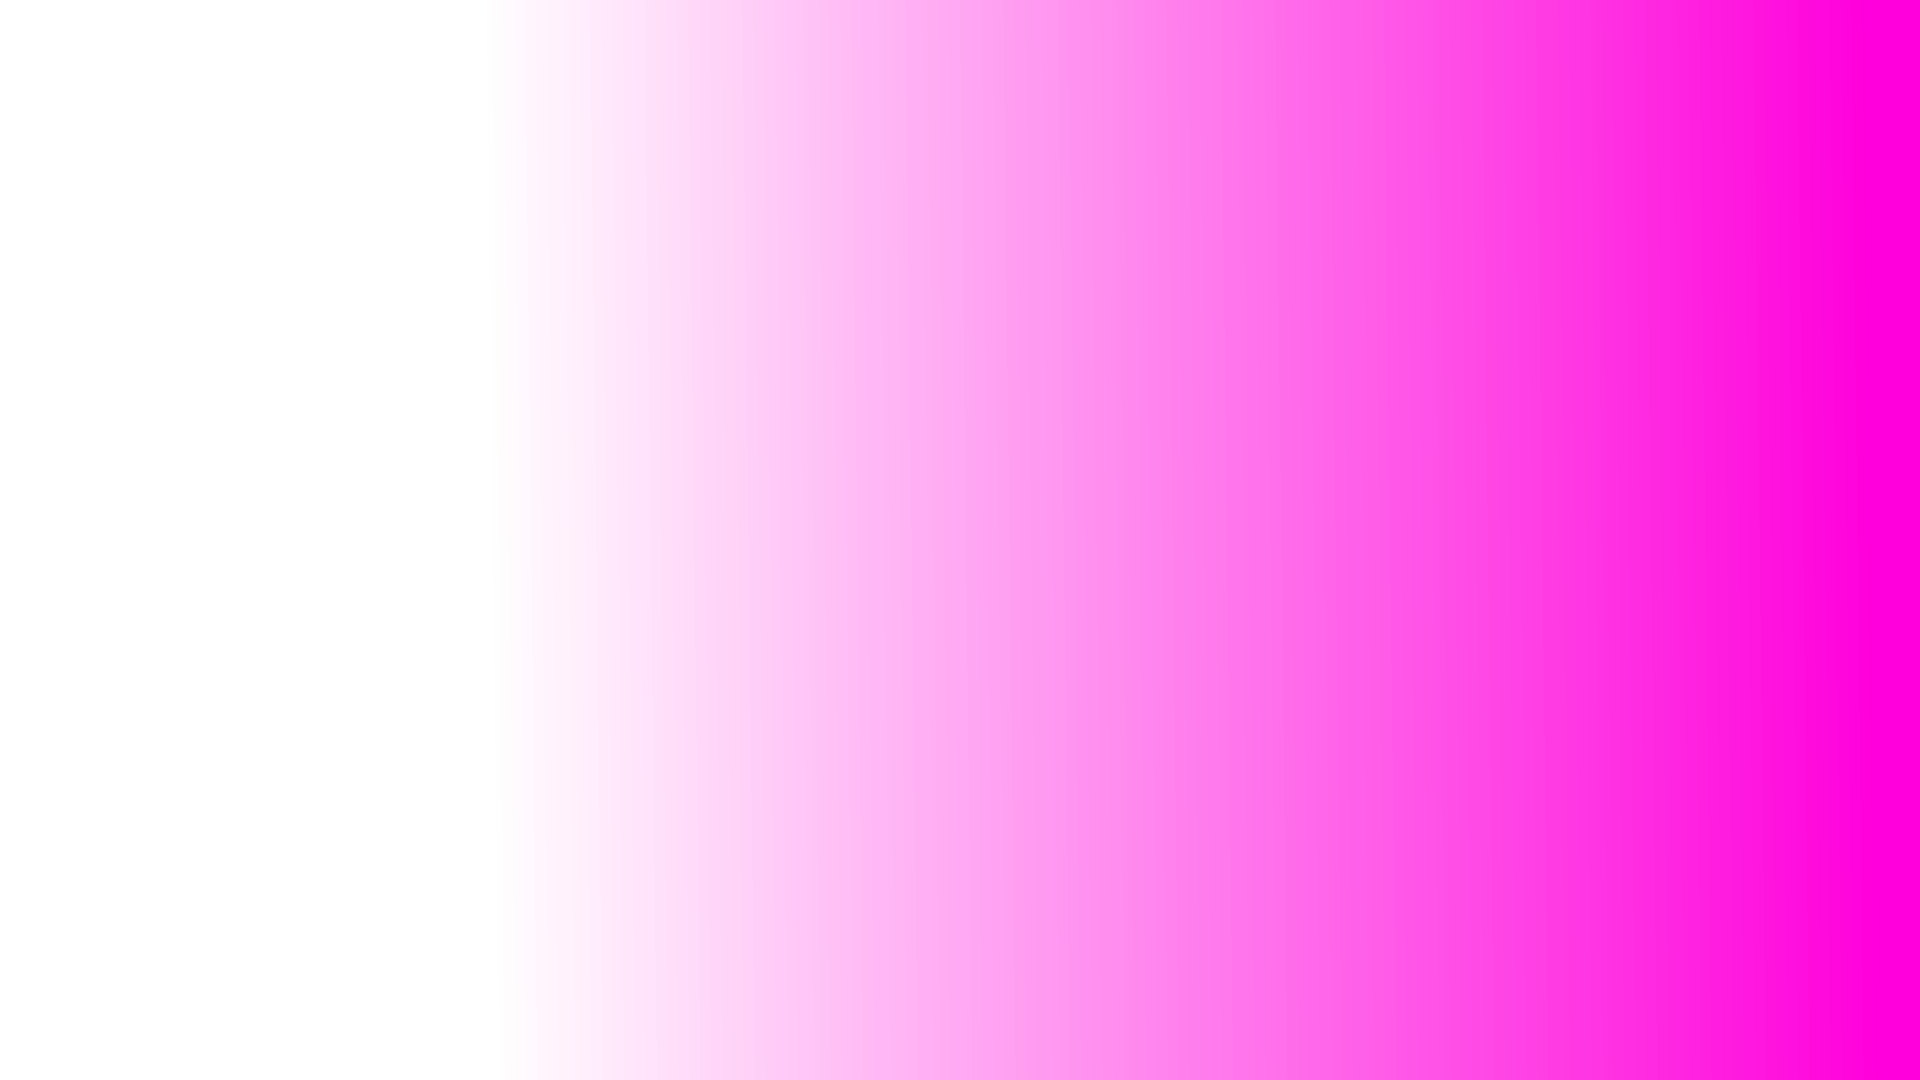 Light Pink and White Desktop Wallpaper Background